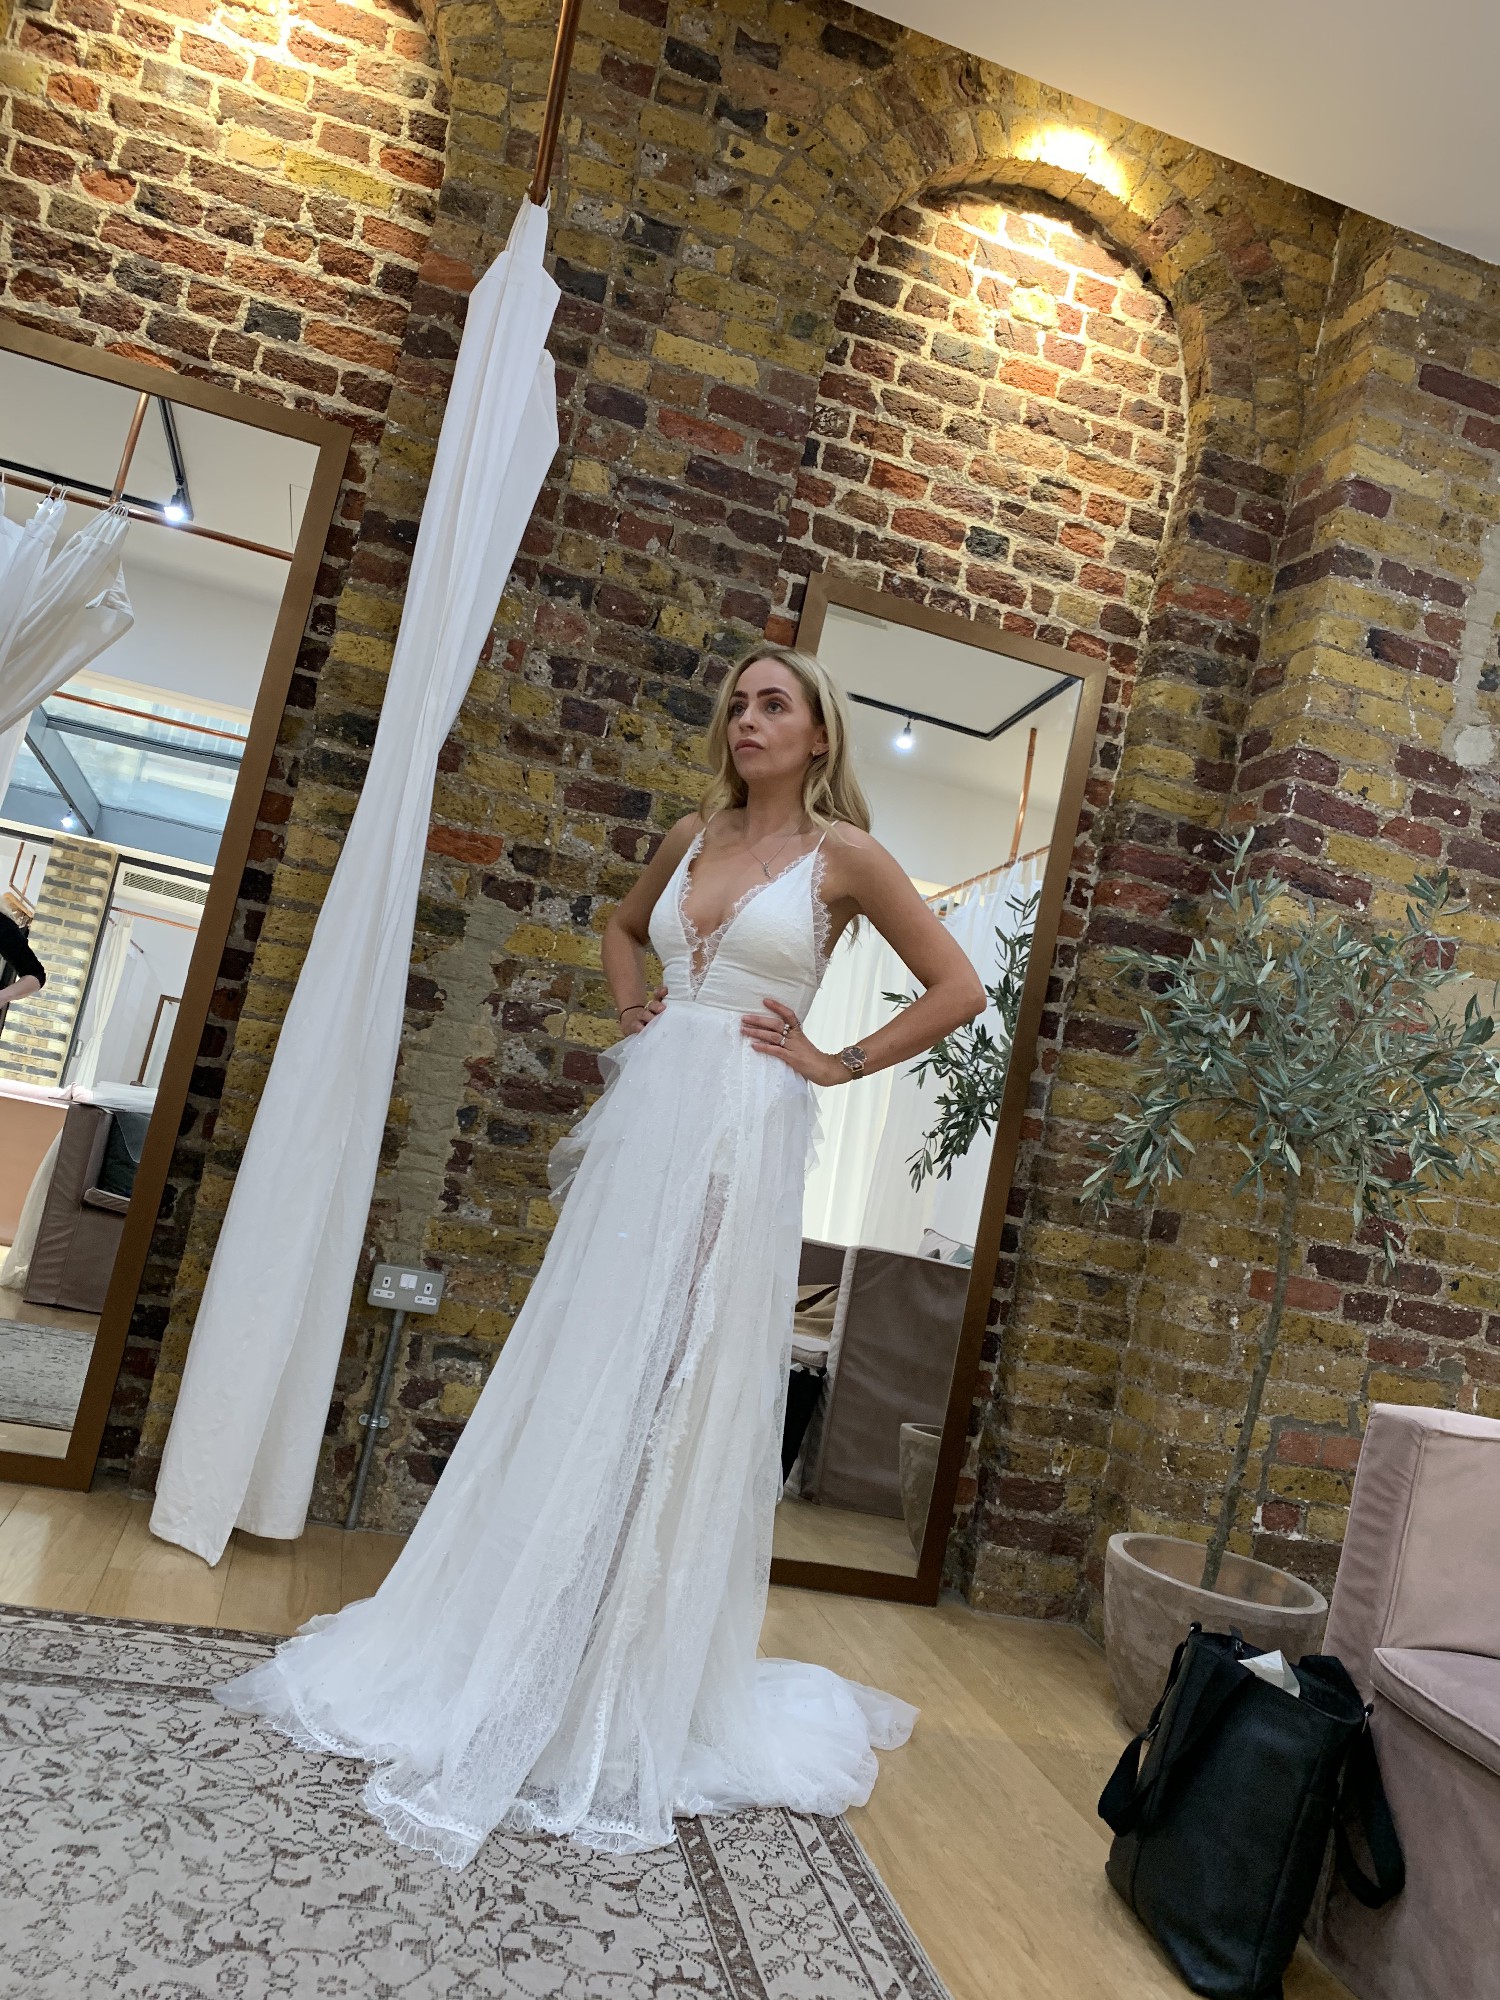 Grace Loves Lace Song Wedding Dress Save 73% - Stillwhite